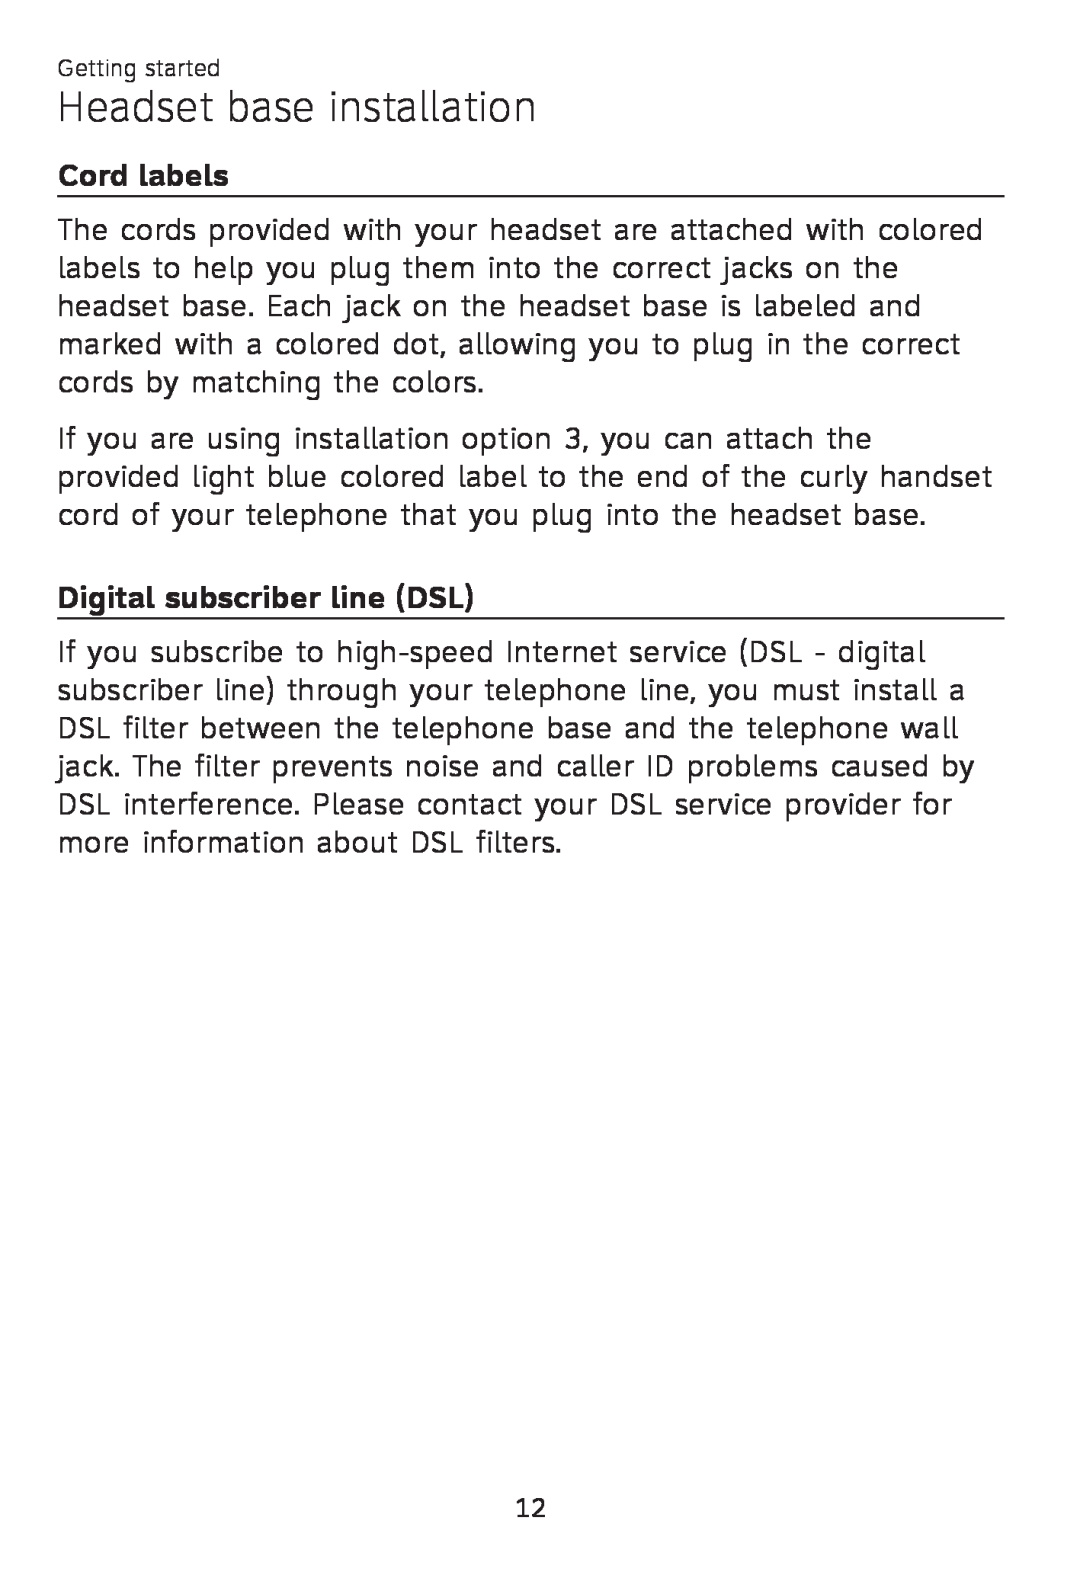 AT&T TL 7610 user manual Cord labels, Digital subscriber line DSL, Headset base installation 